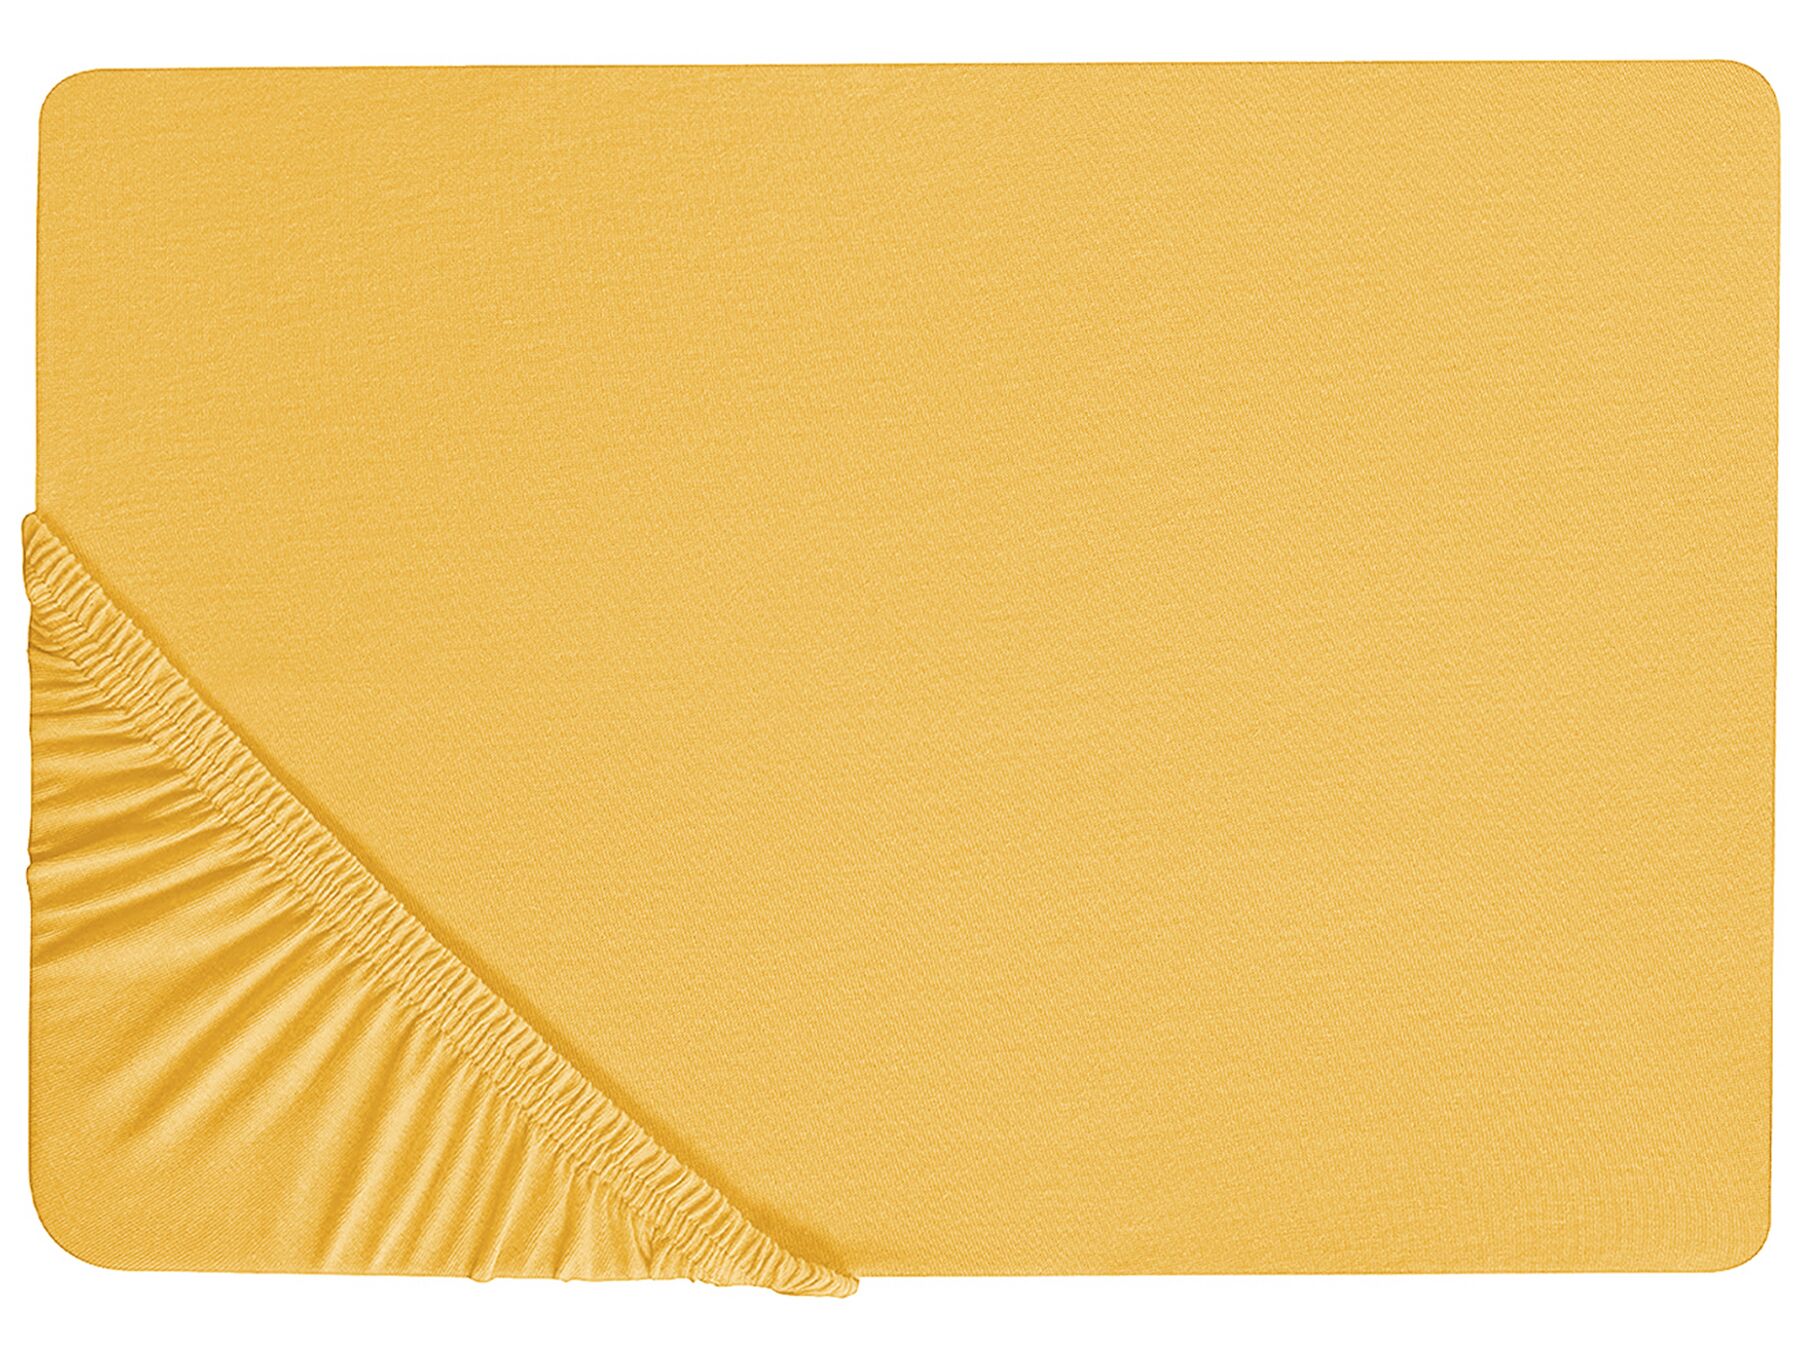 Lenzuolo con angoli cotone giallo senape 180 x 200 cm JANBU_845278